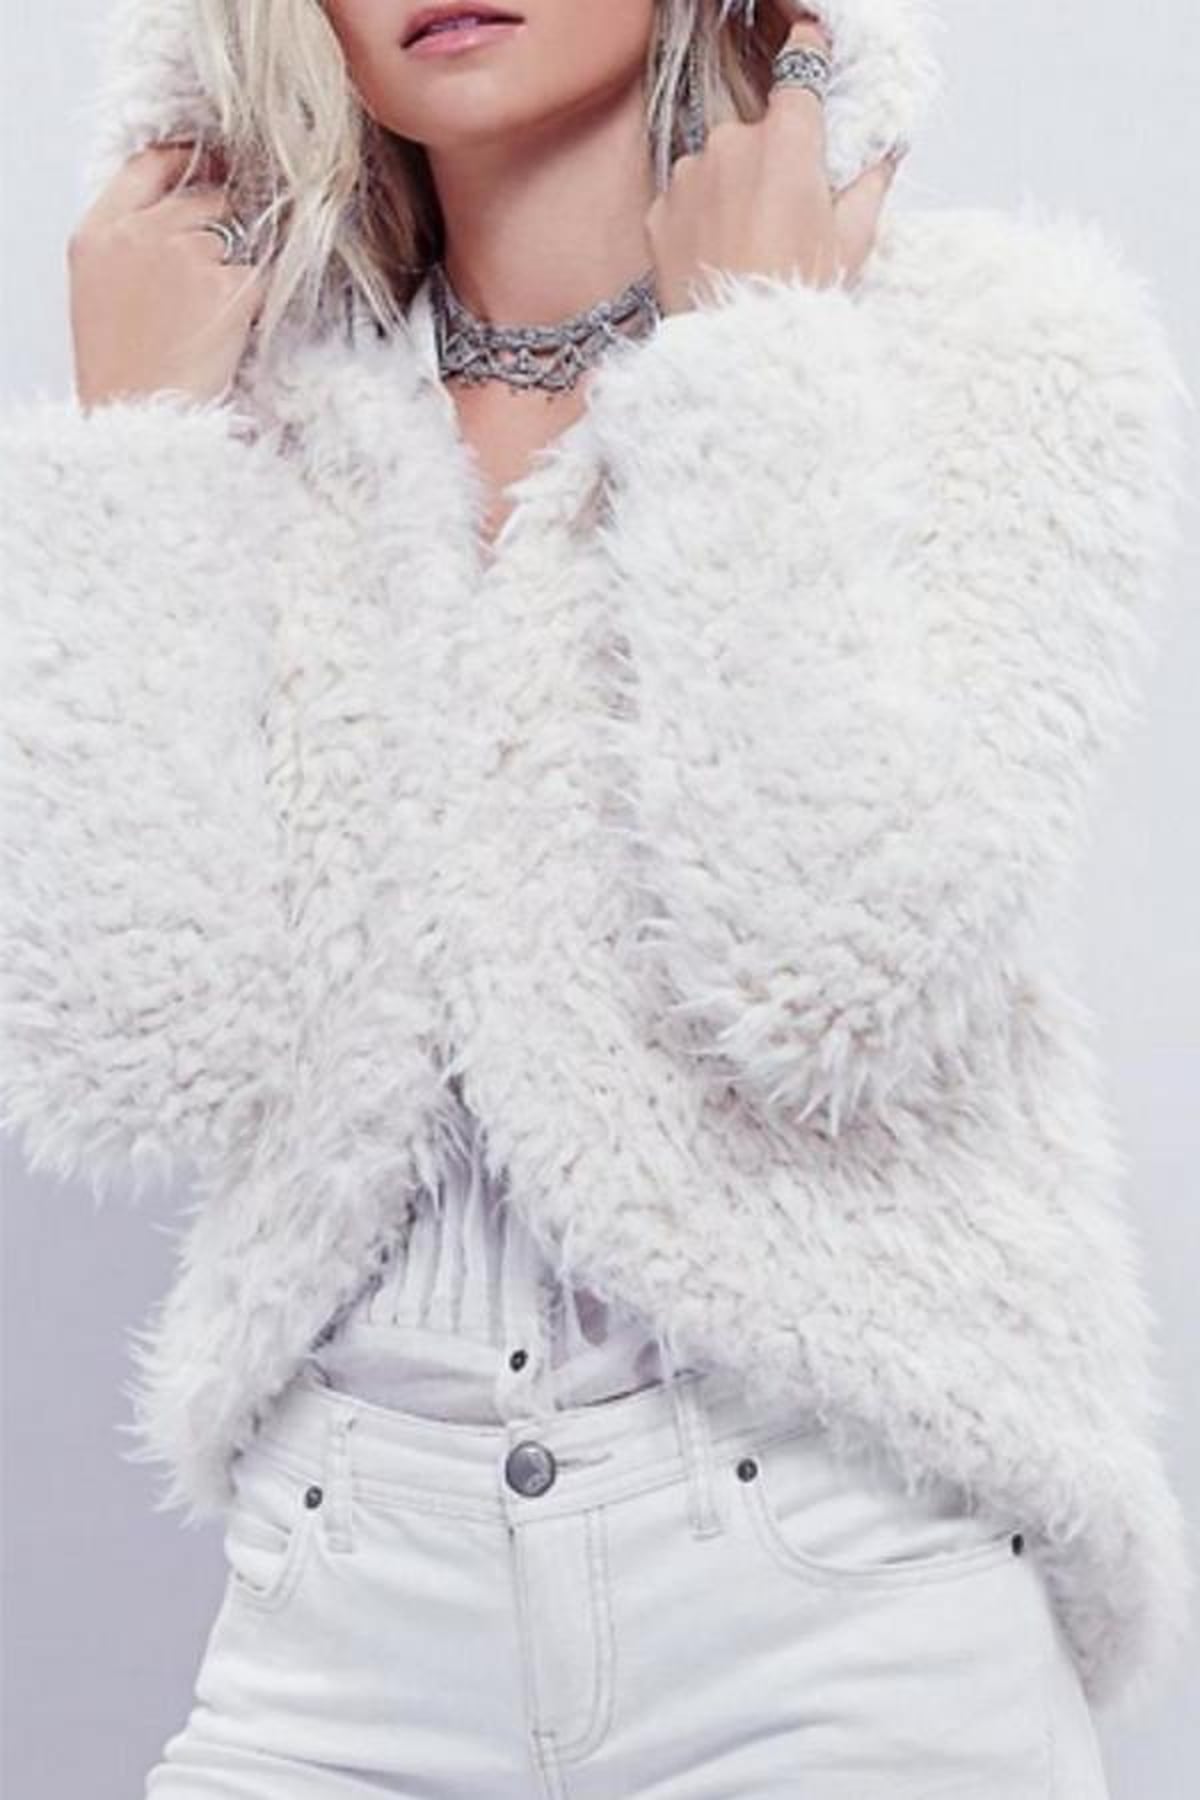 Gigi Hadid Wearing All White January 2016 | POPSUGAR Fashion